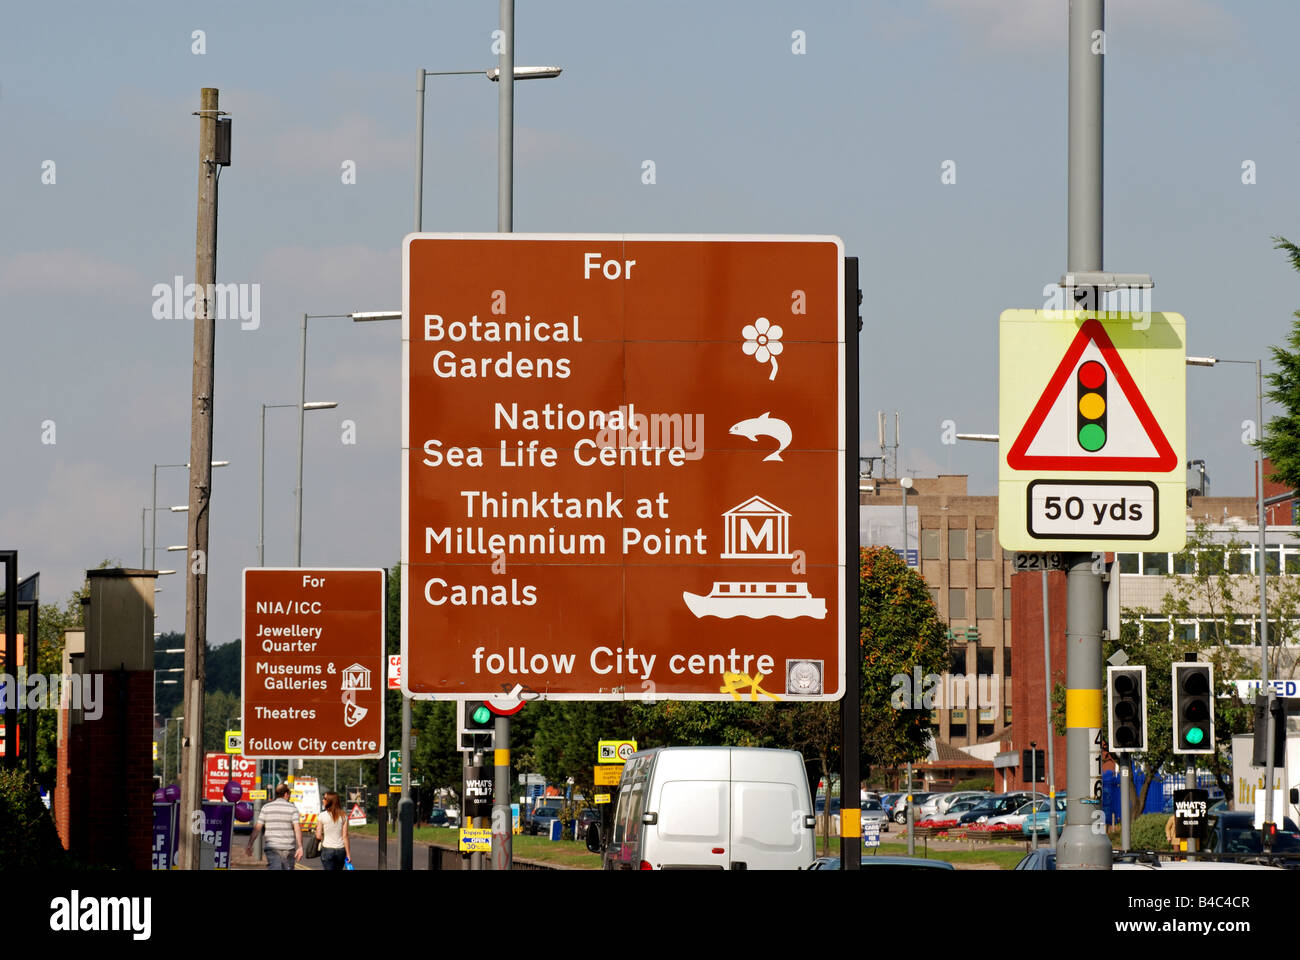 Birmingham attractions sign, Sheldon, West Midlands, England, UK Stock Photo